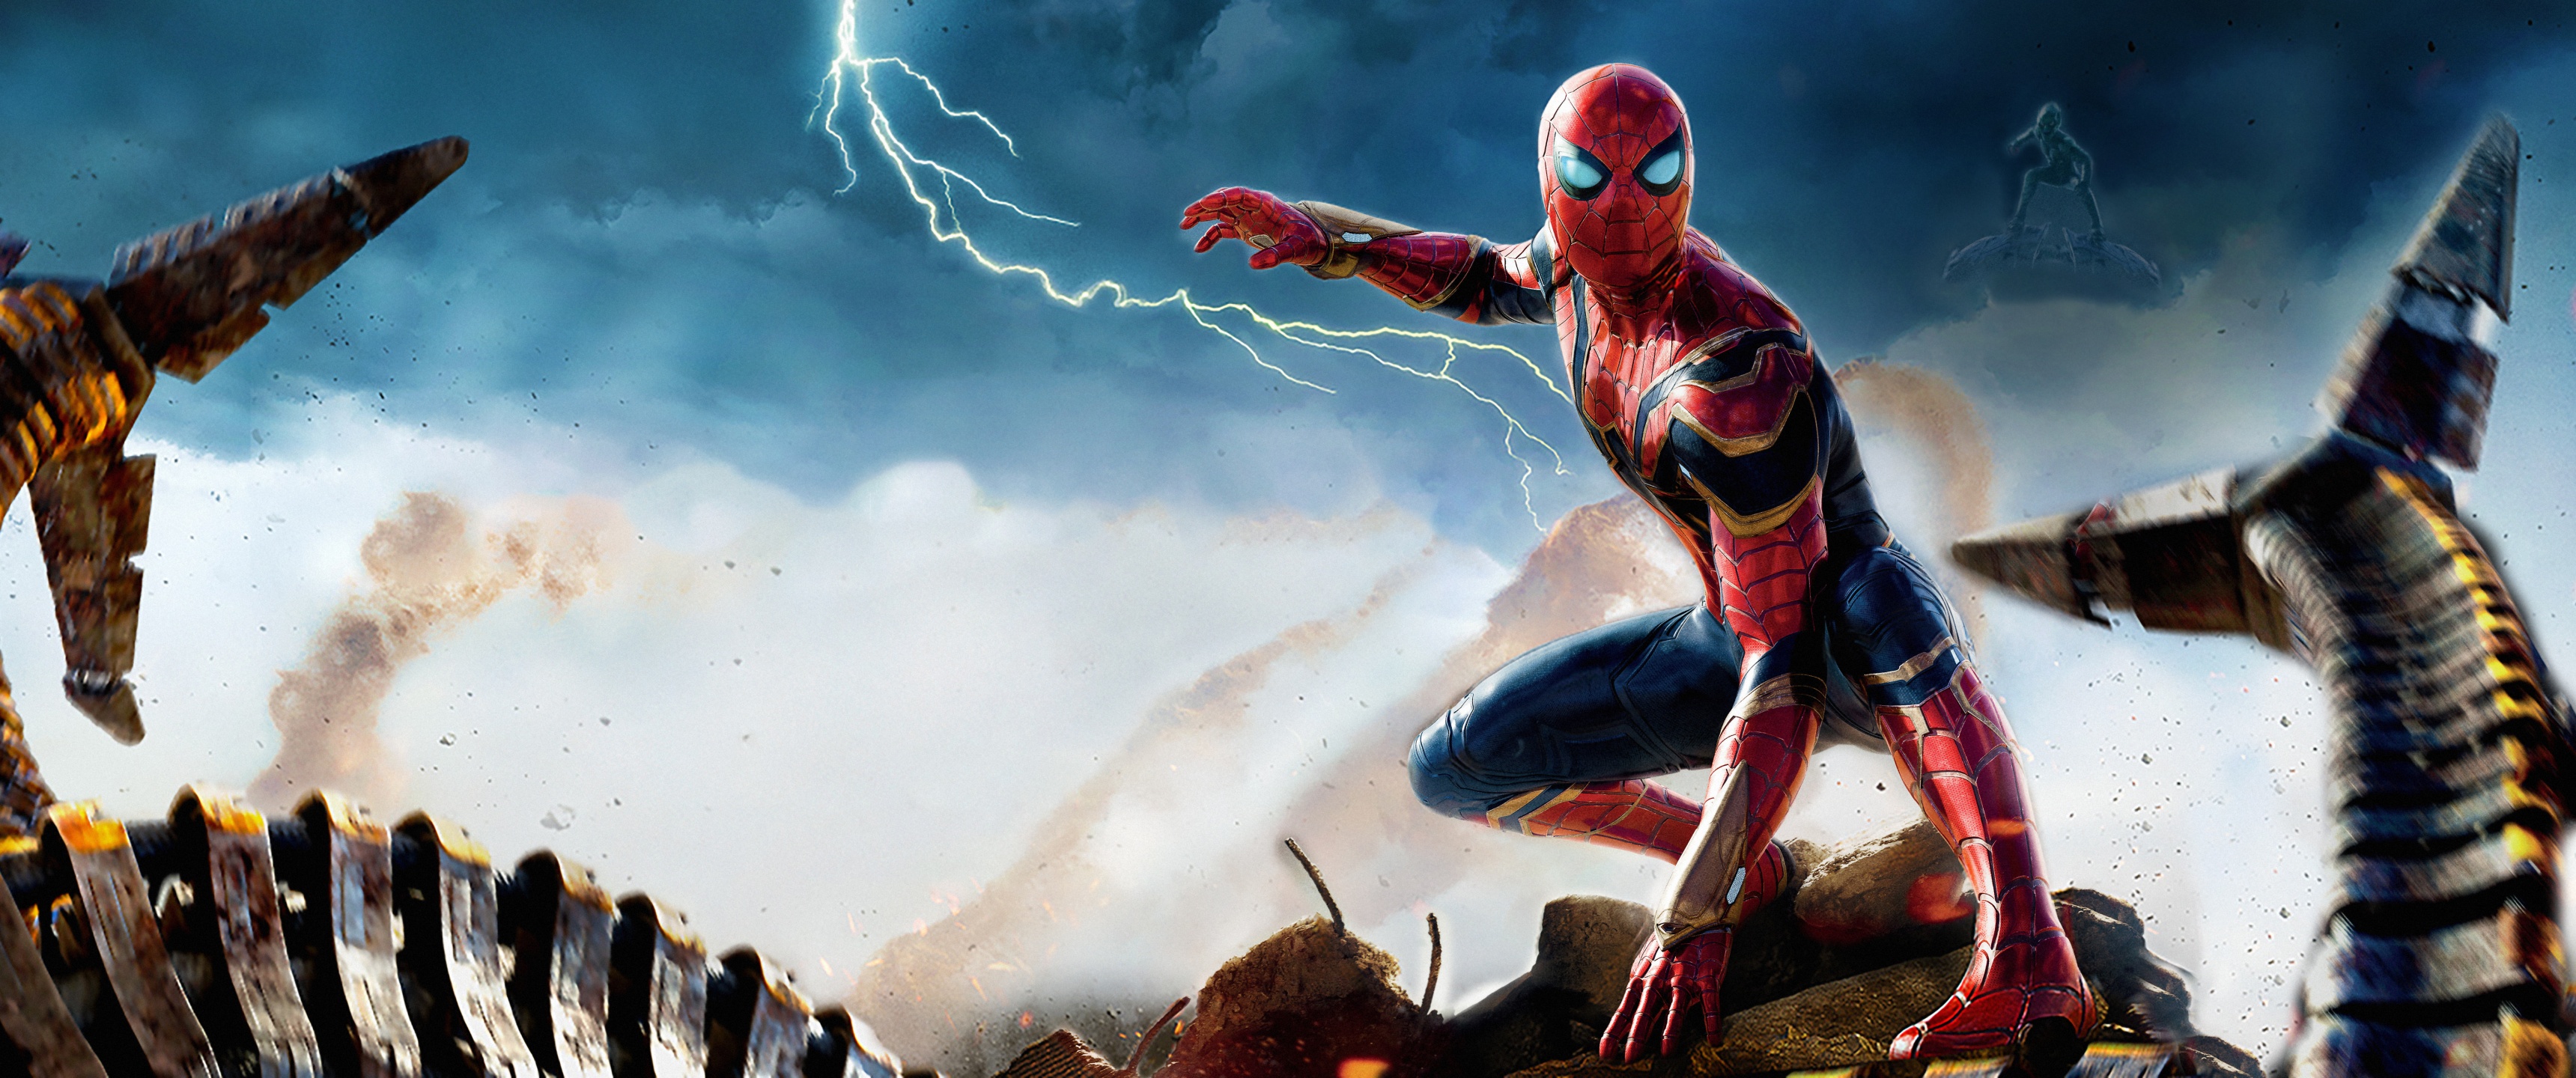 600+ 4K Spider-Man Wallpapers | Background Images